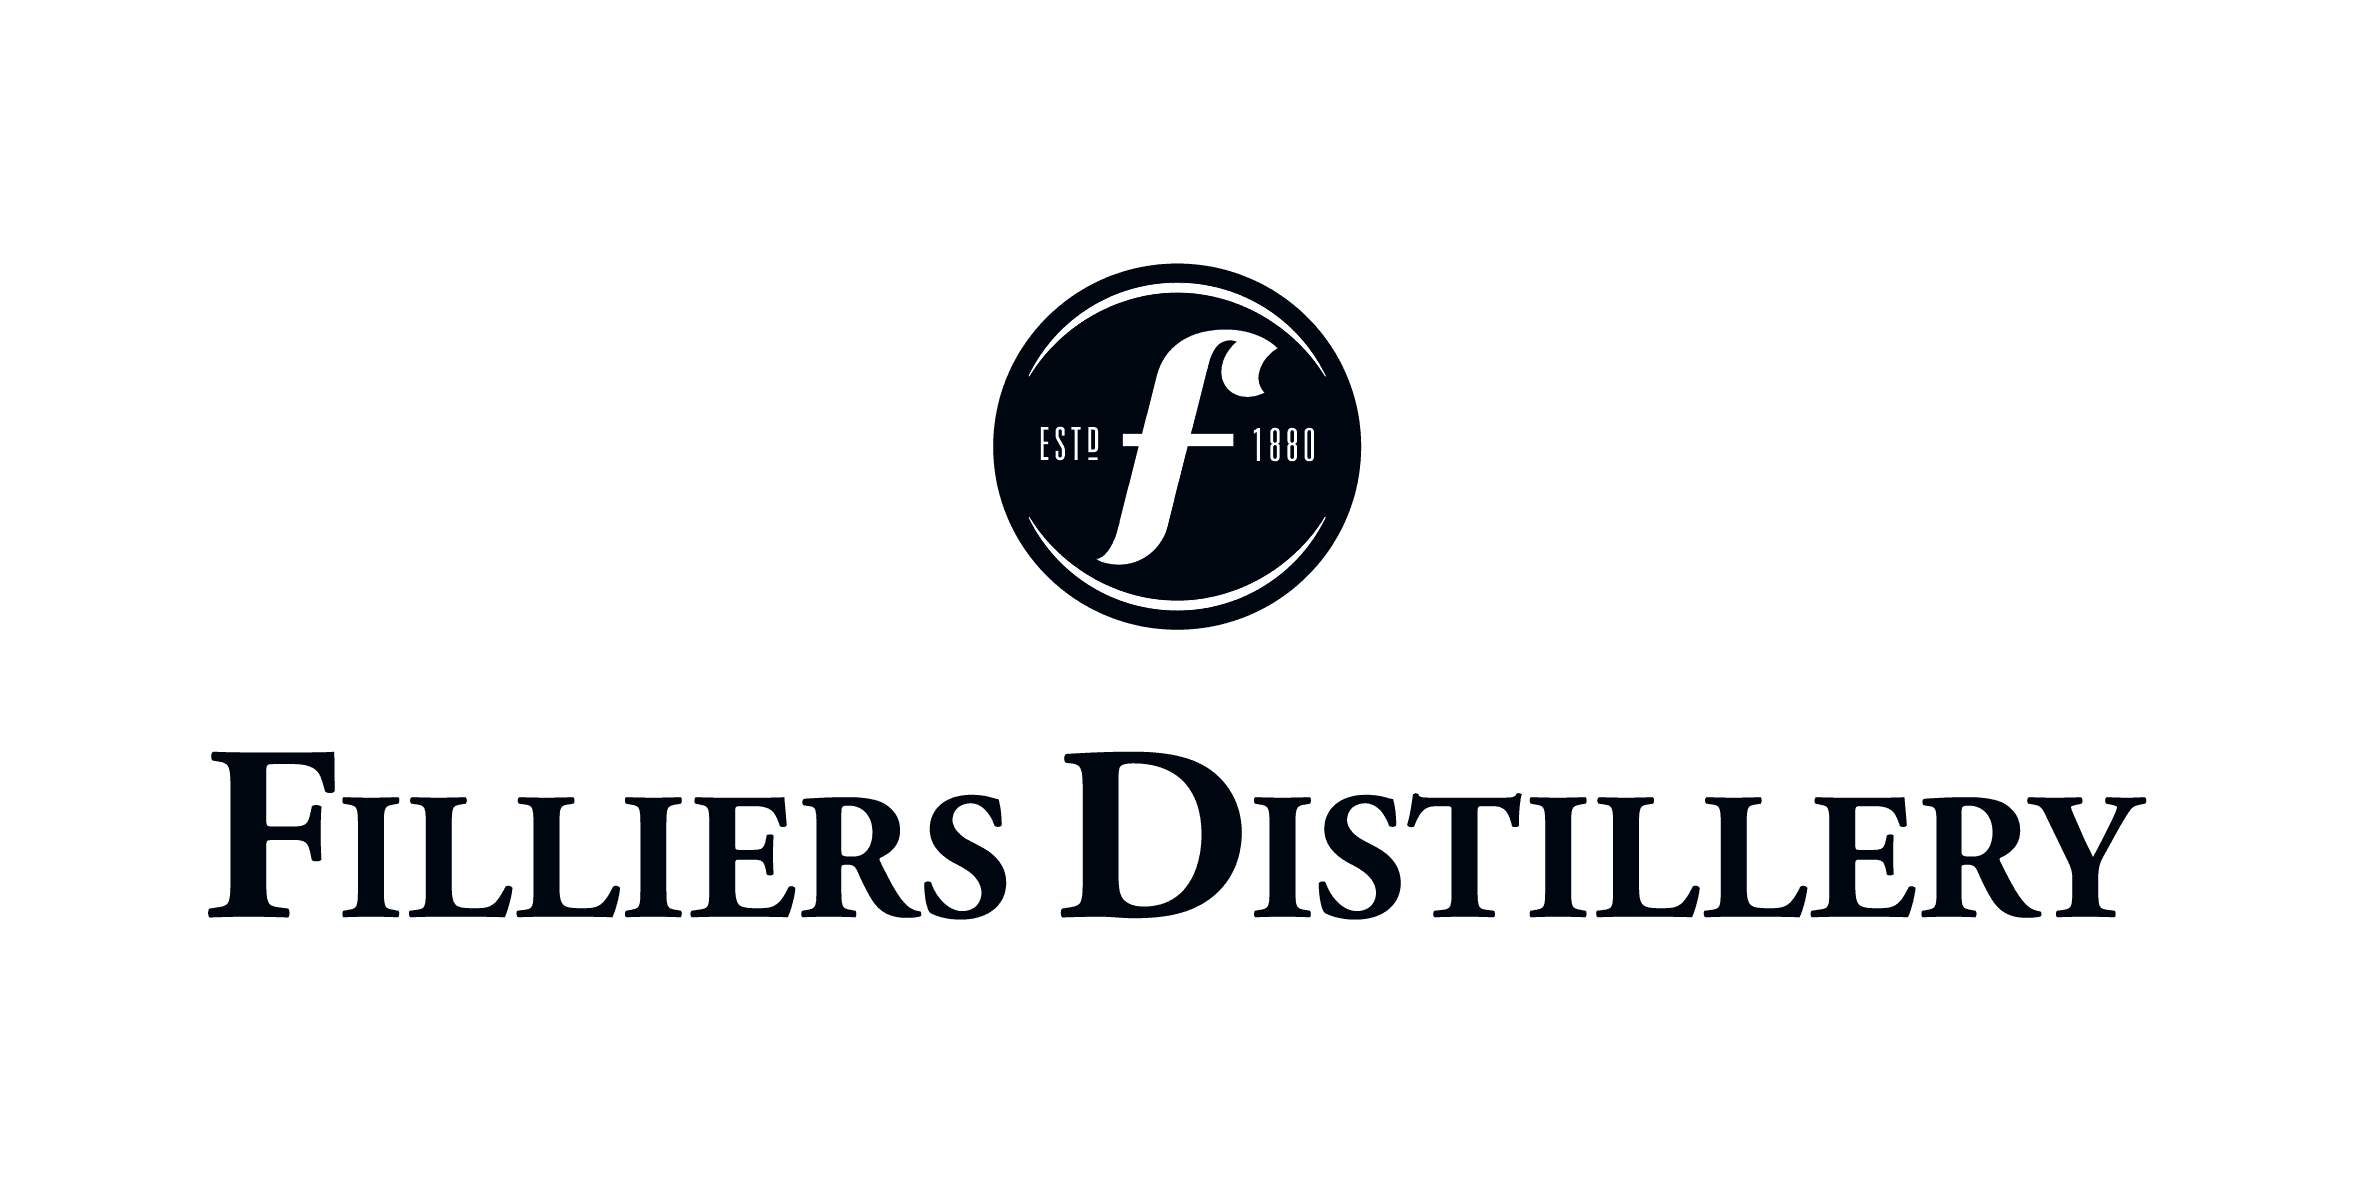 Filliers Distillery : Brand Short Description Type Here.